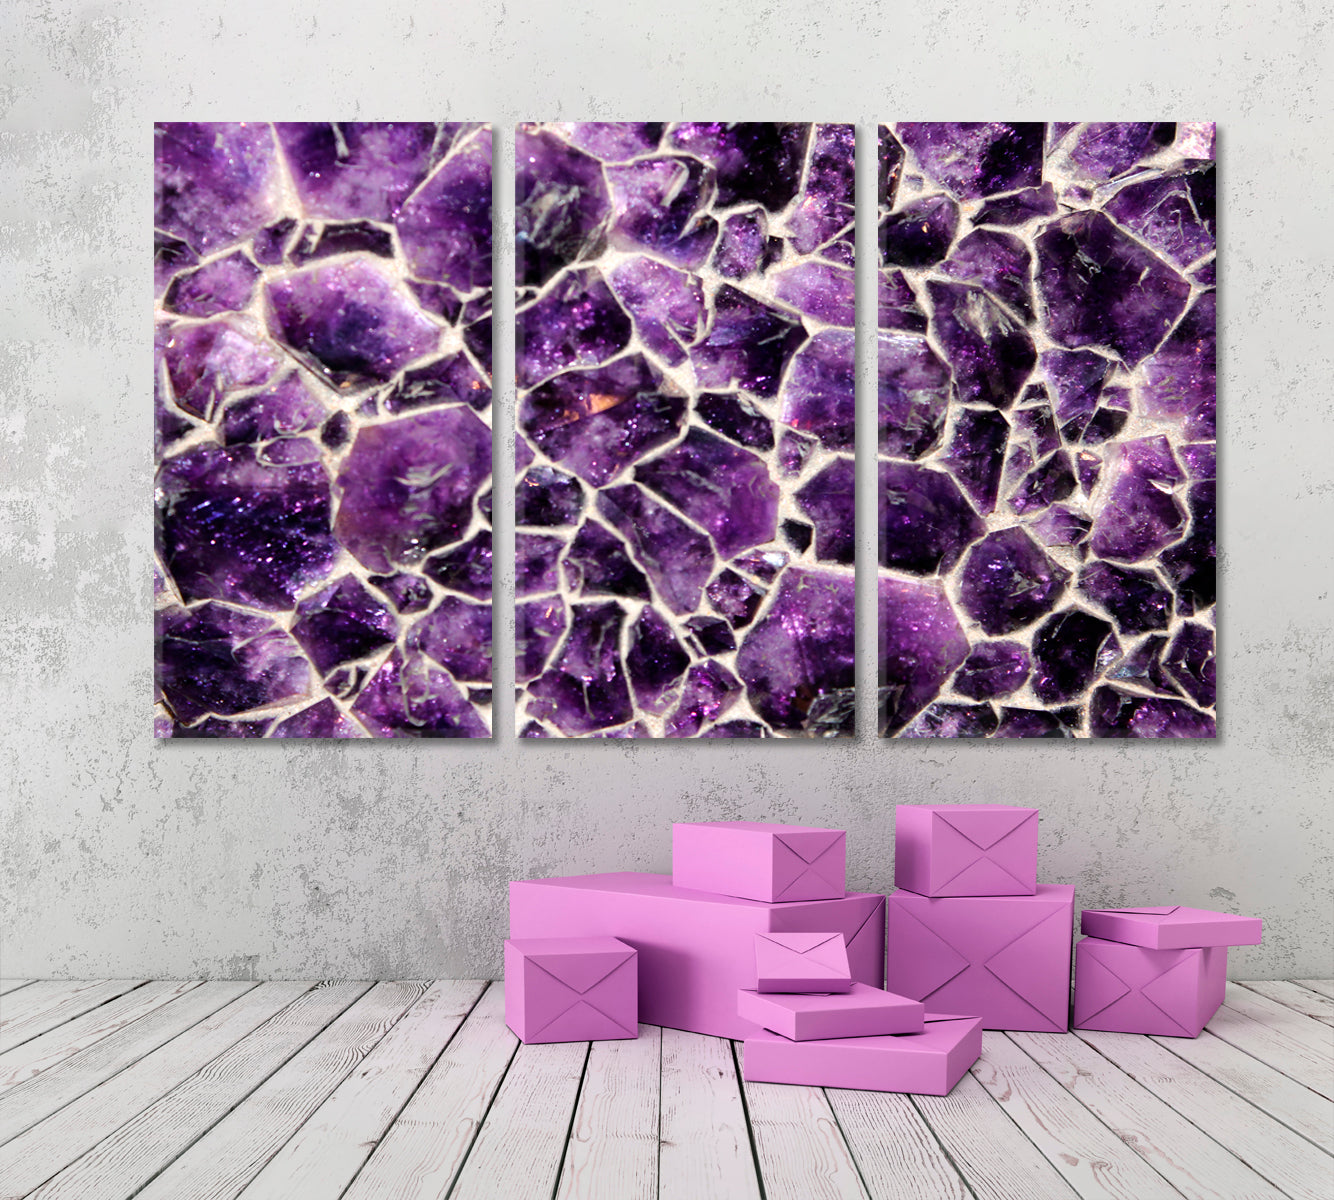 Natural Purple Amethyst Crystals Stunning Beautiful Rock Abstract Art Print Artesty 3 panels 36" x 24" 